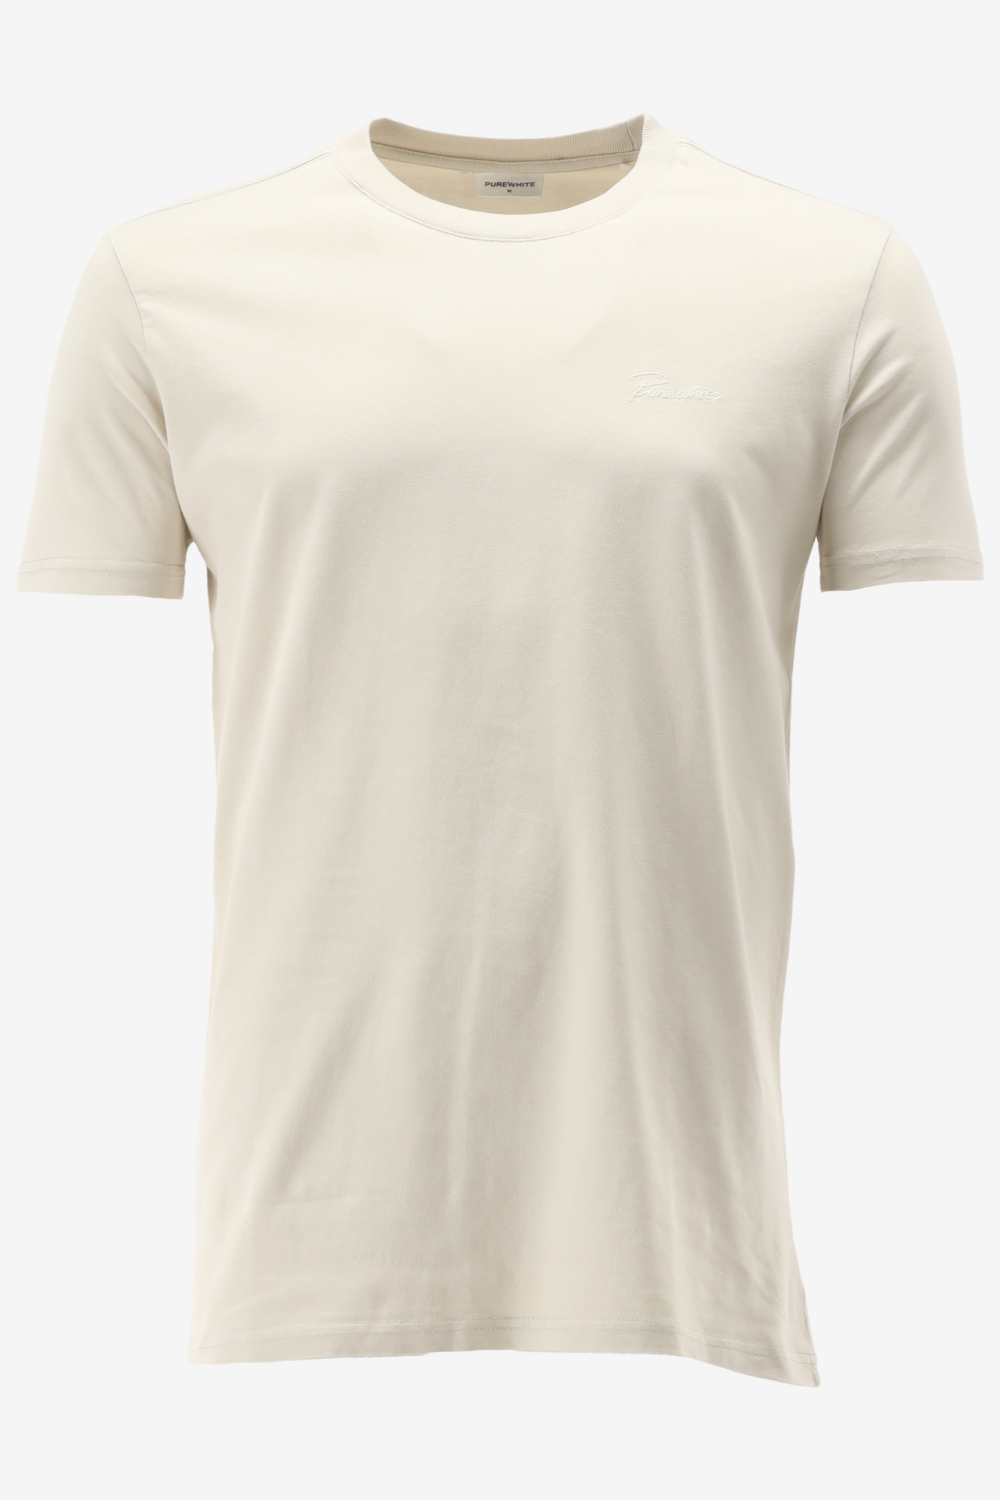 Purewhite T-shirt 